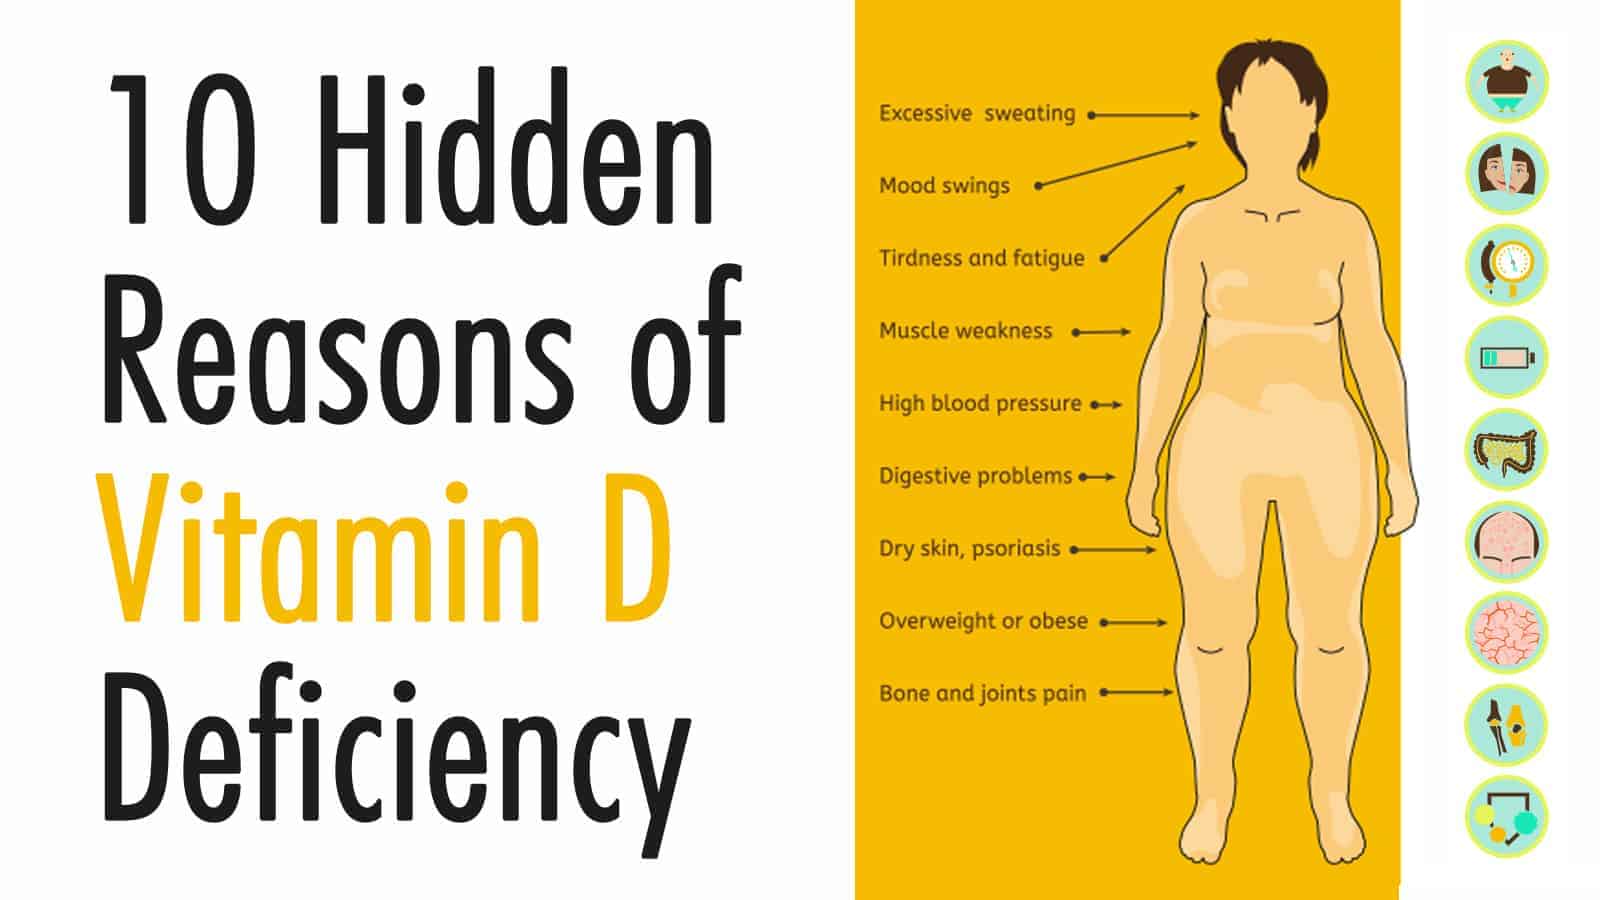 10 Hidden Reasons of Vitamin D Deficiency